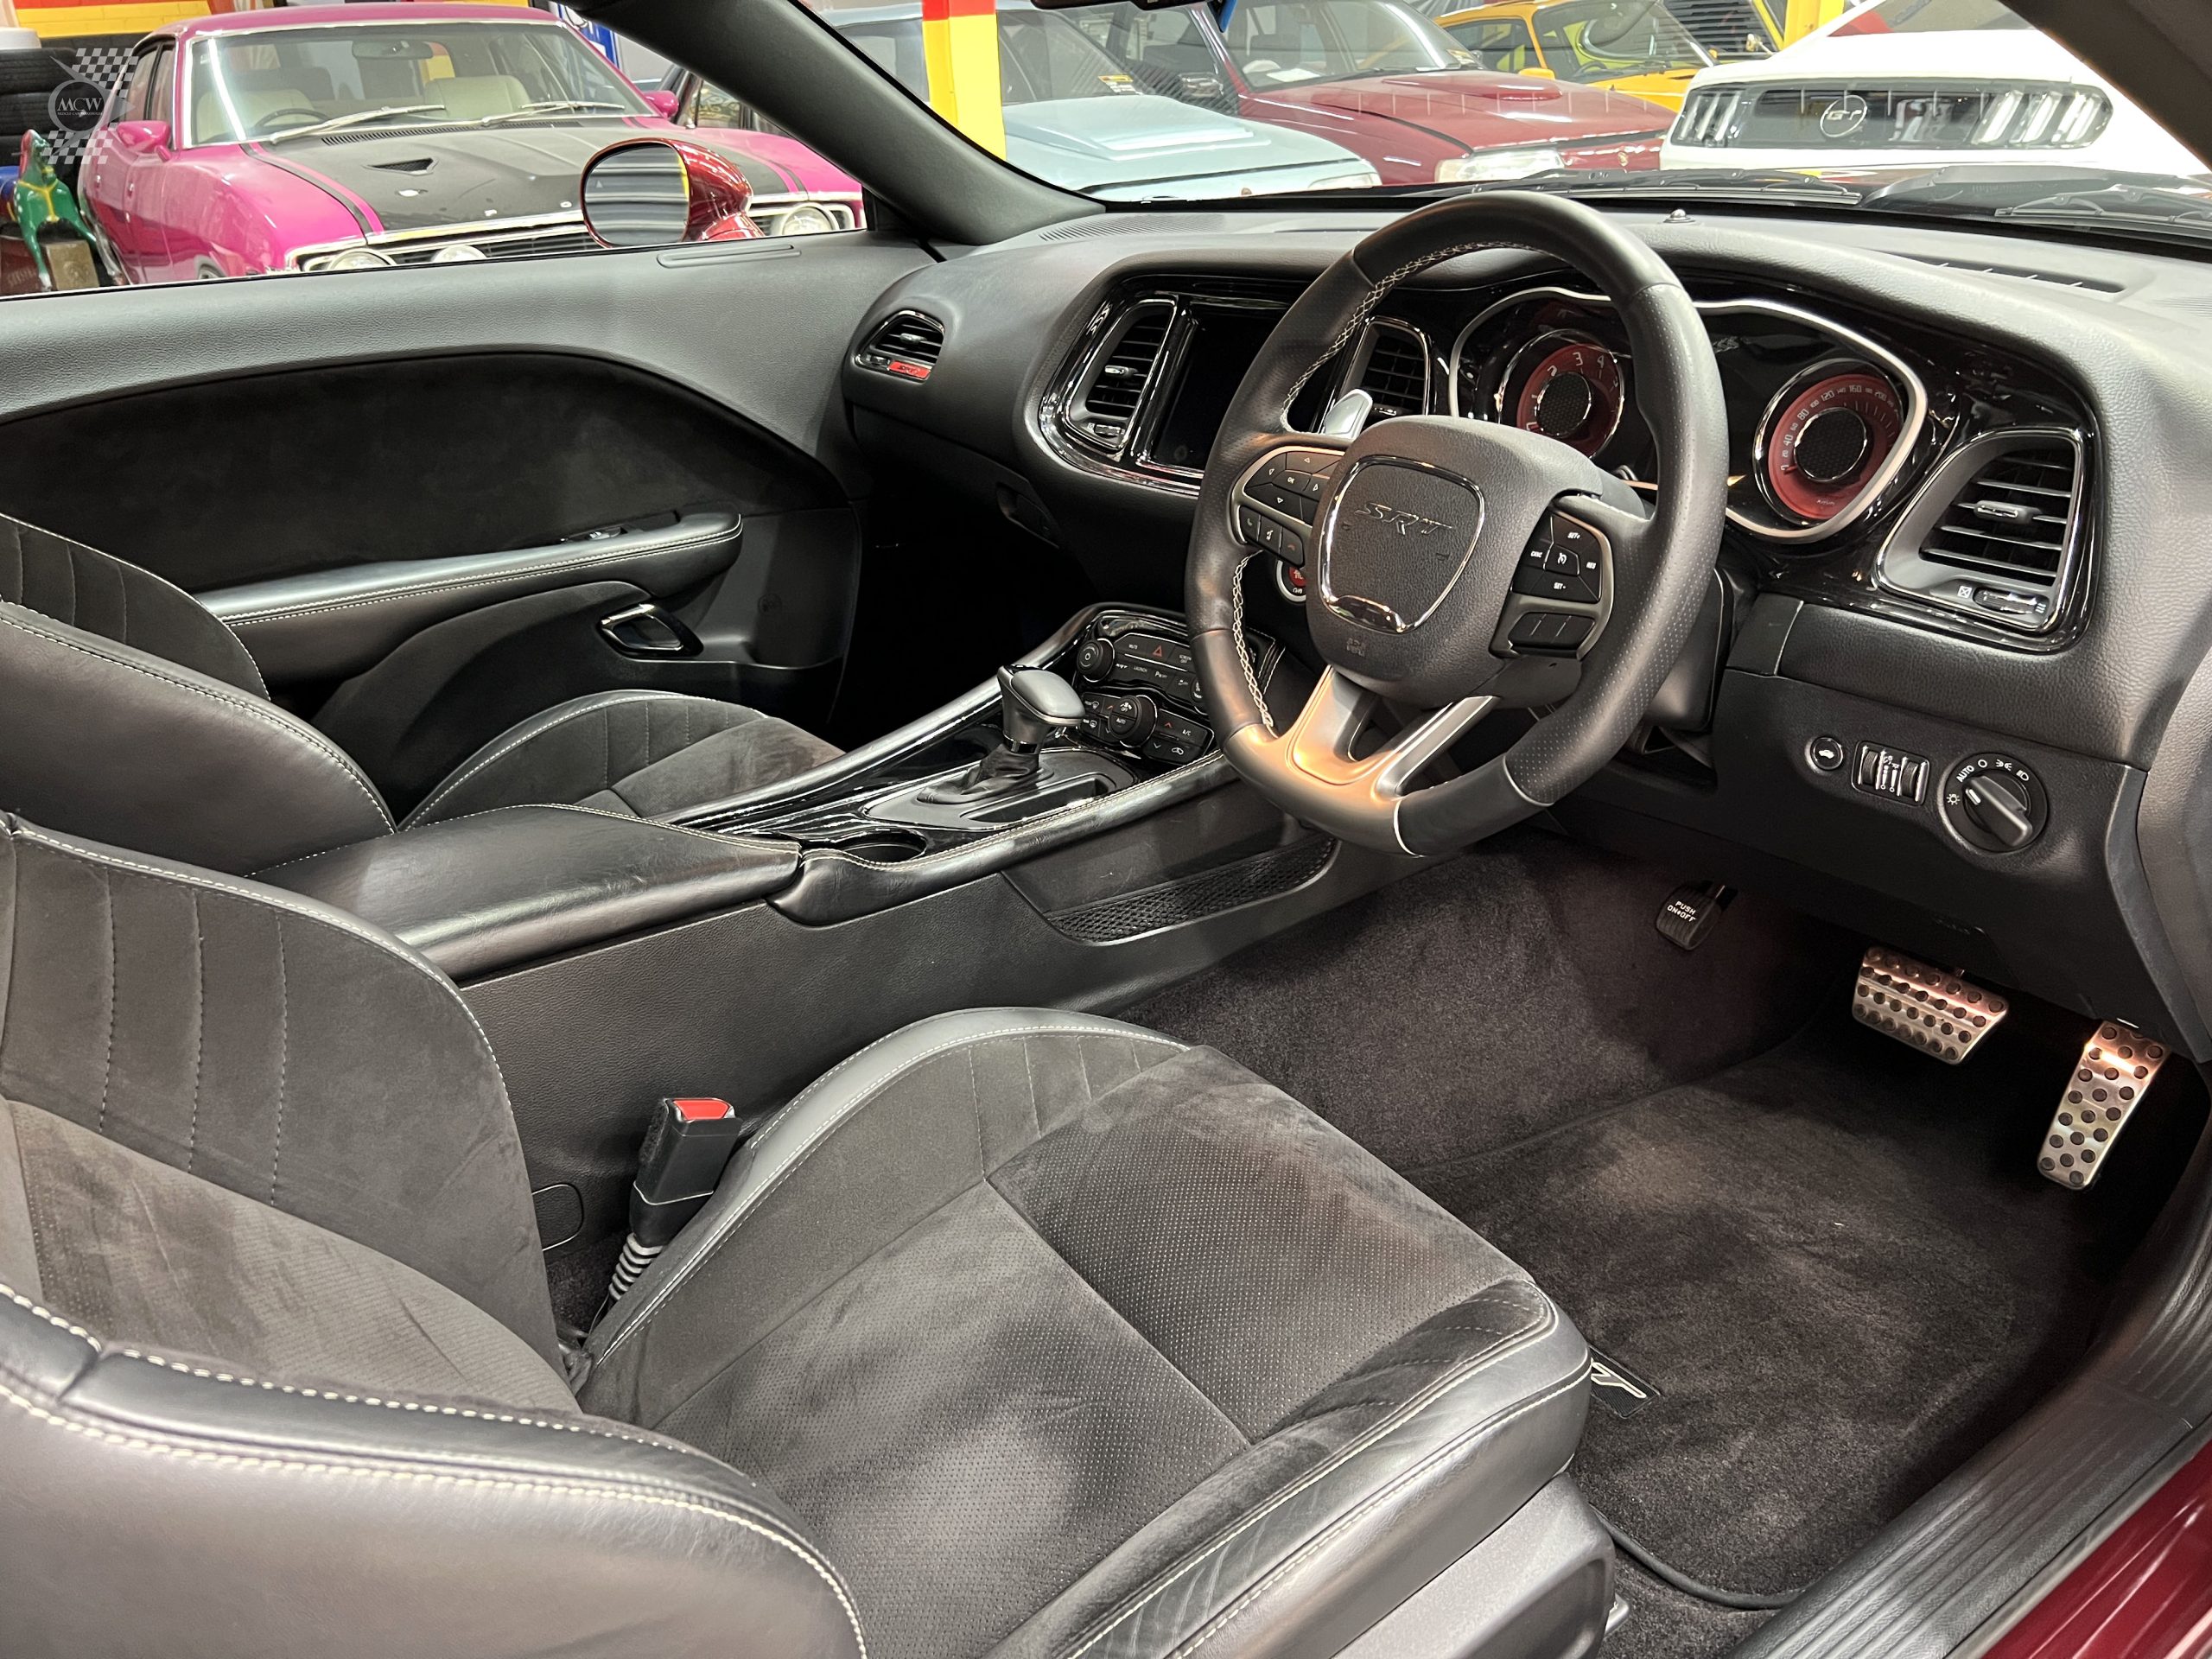 2018 Dodge Challenger Hellcat SRT Interior - Muscle Car Warehouse